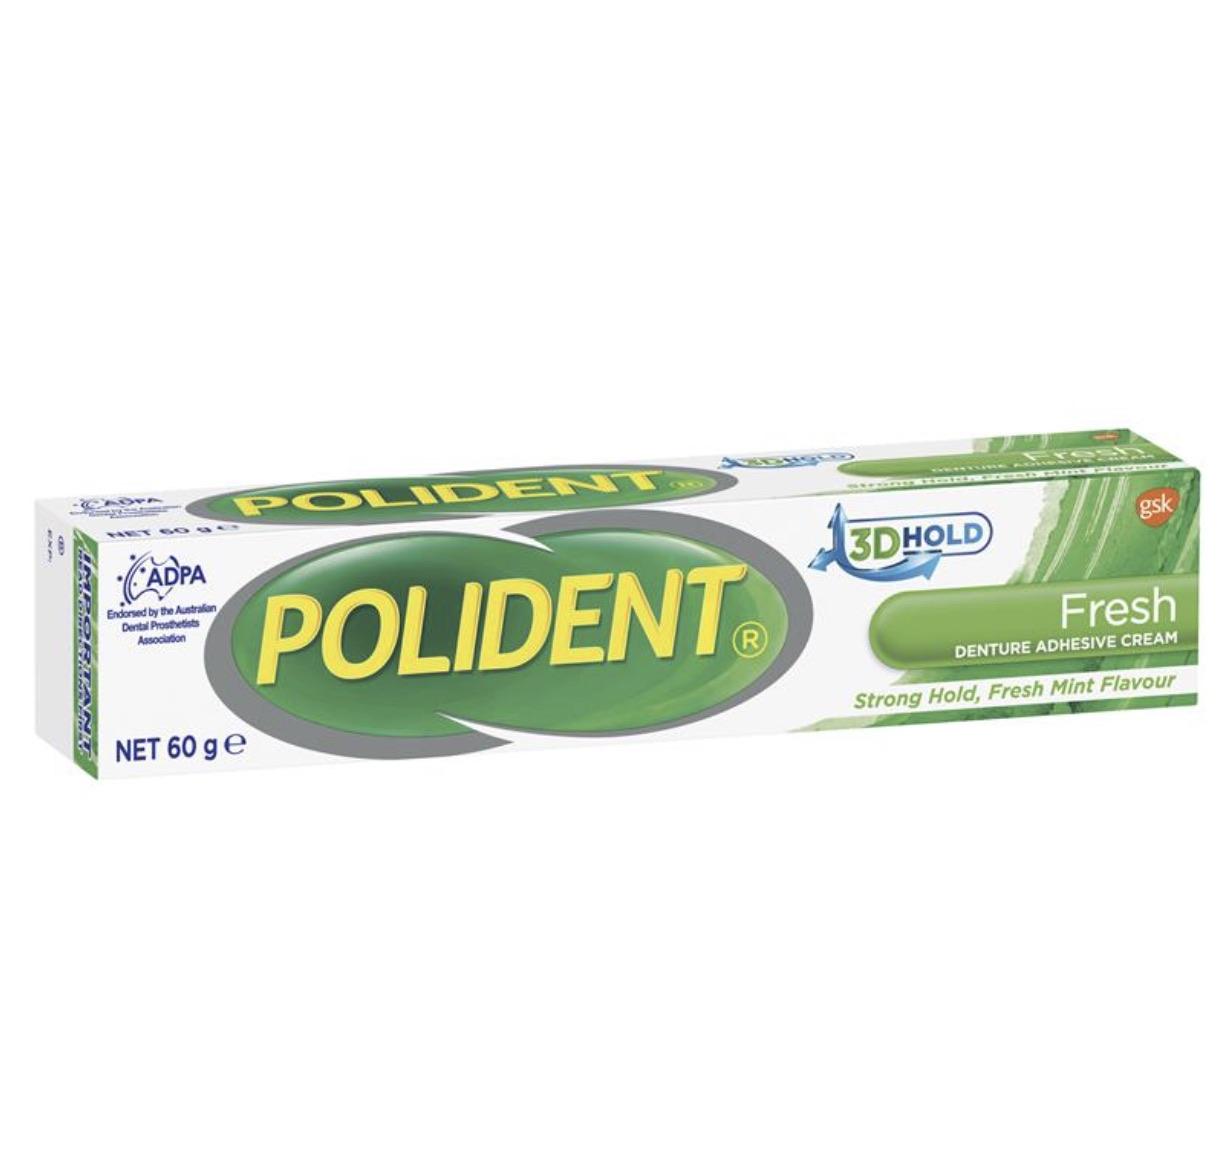 Polident Adhesive Denture Cream 60g Each